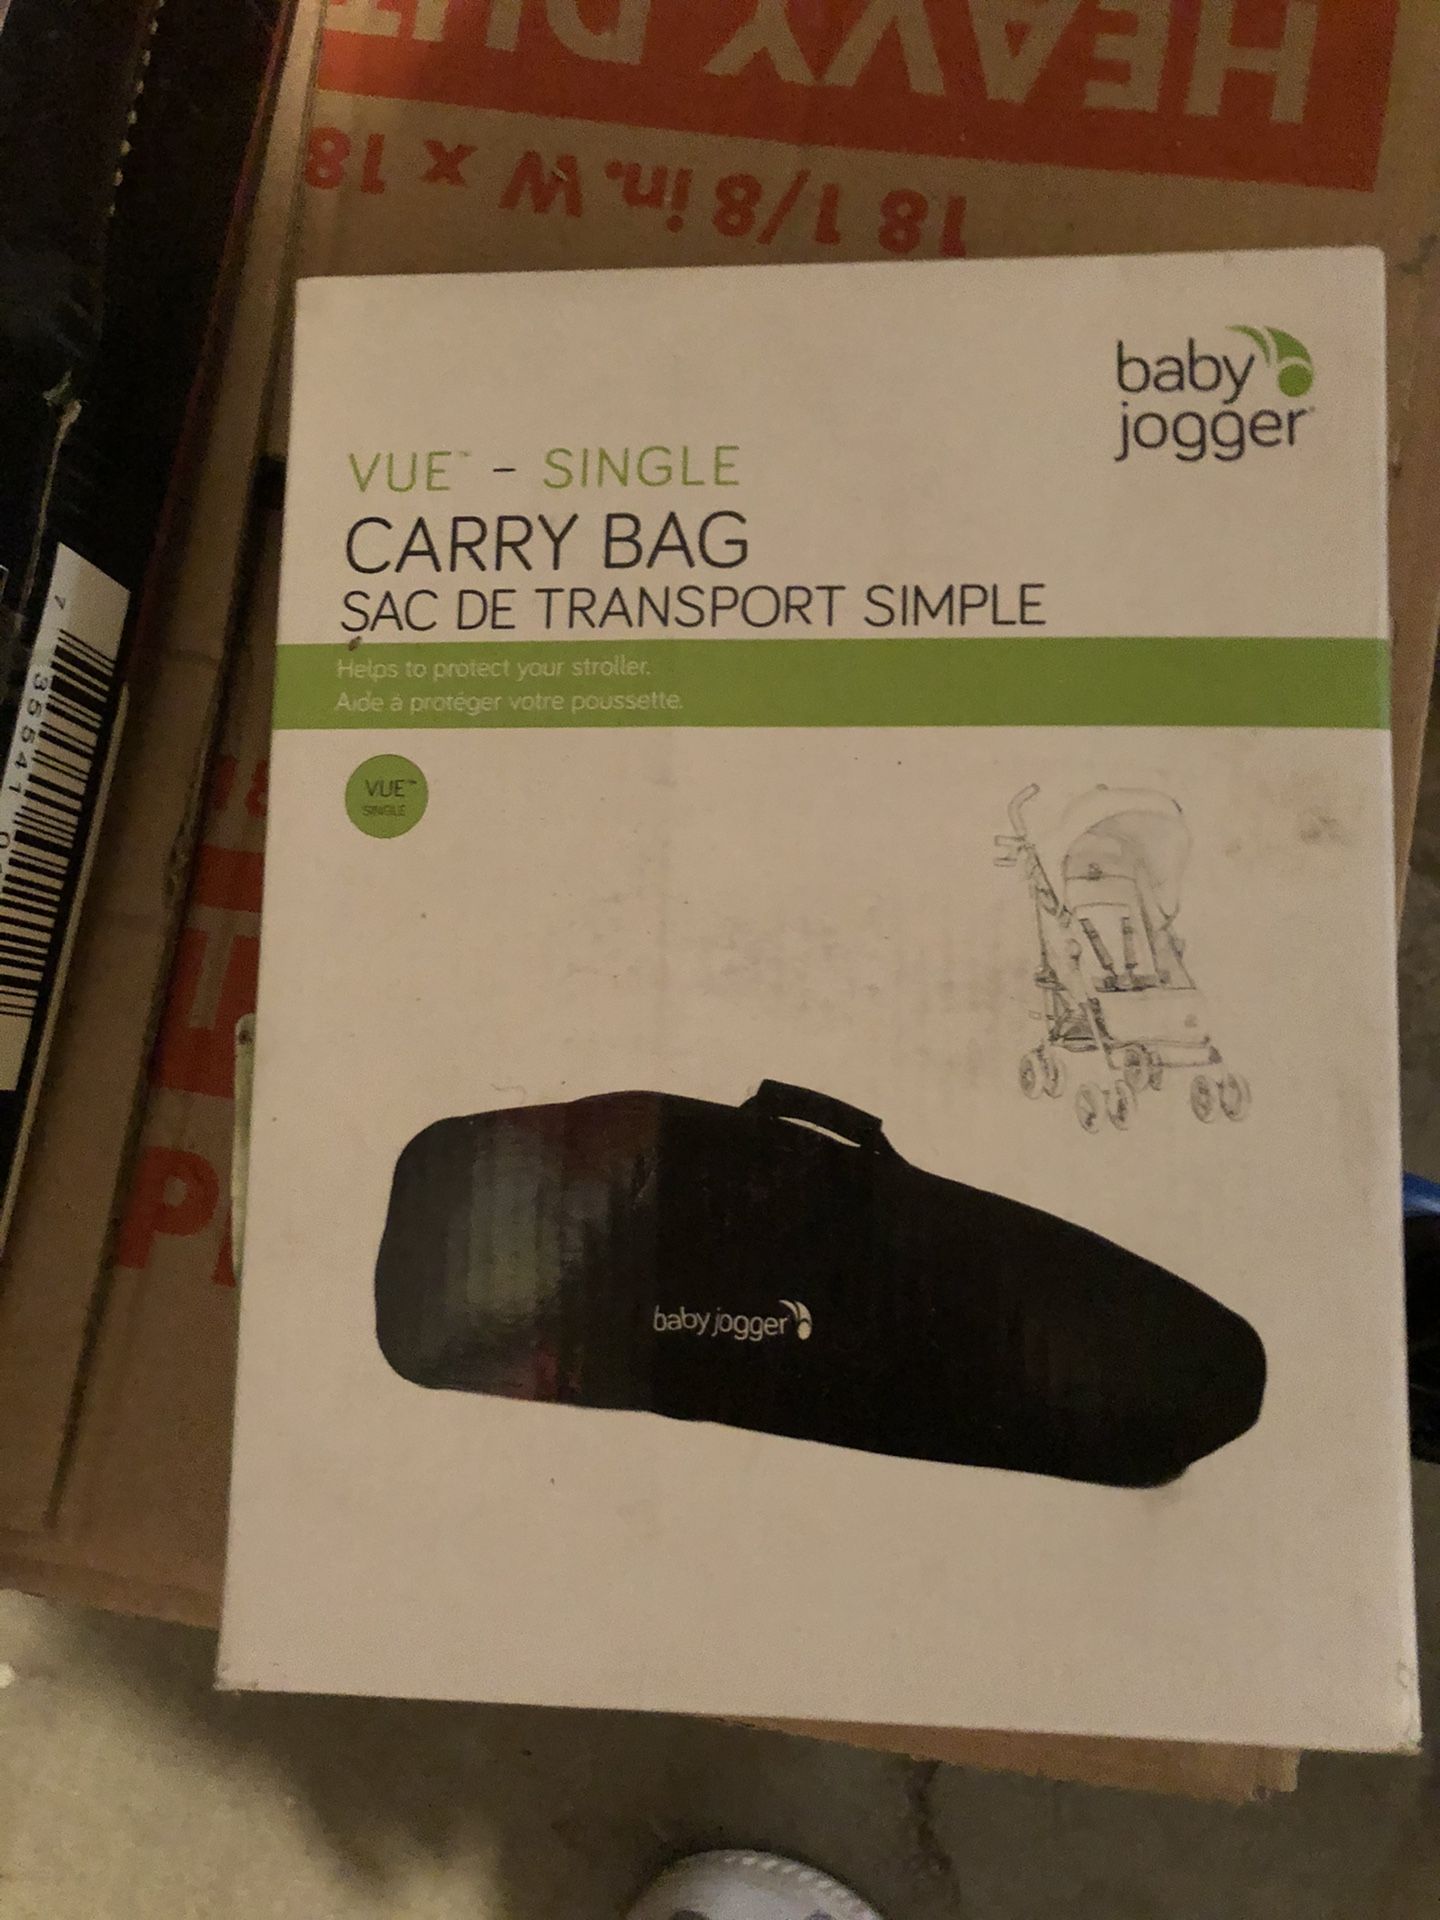 Baby jogger stroller carry bag - vue -single